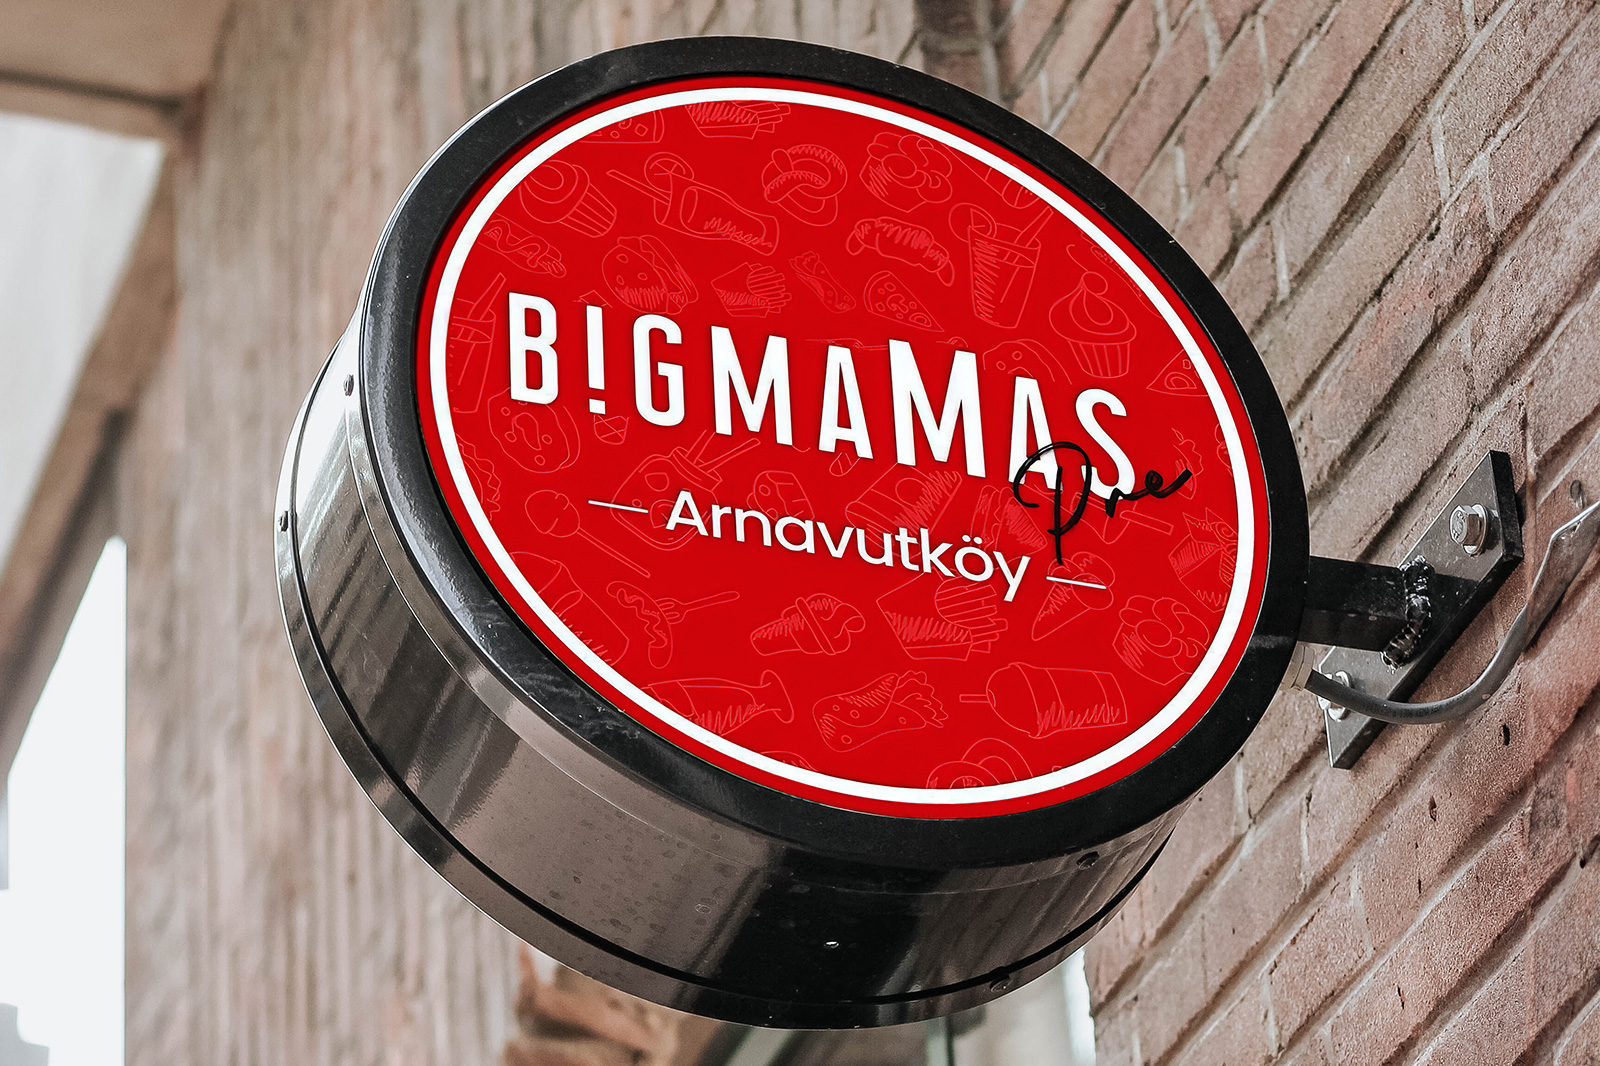 BIG MAMMA'S ARNAVUTKÖY